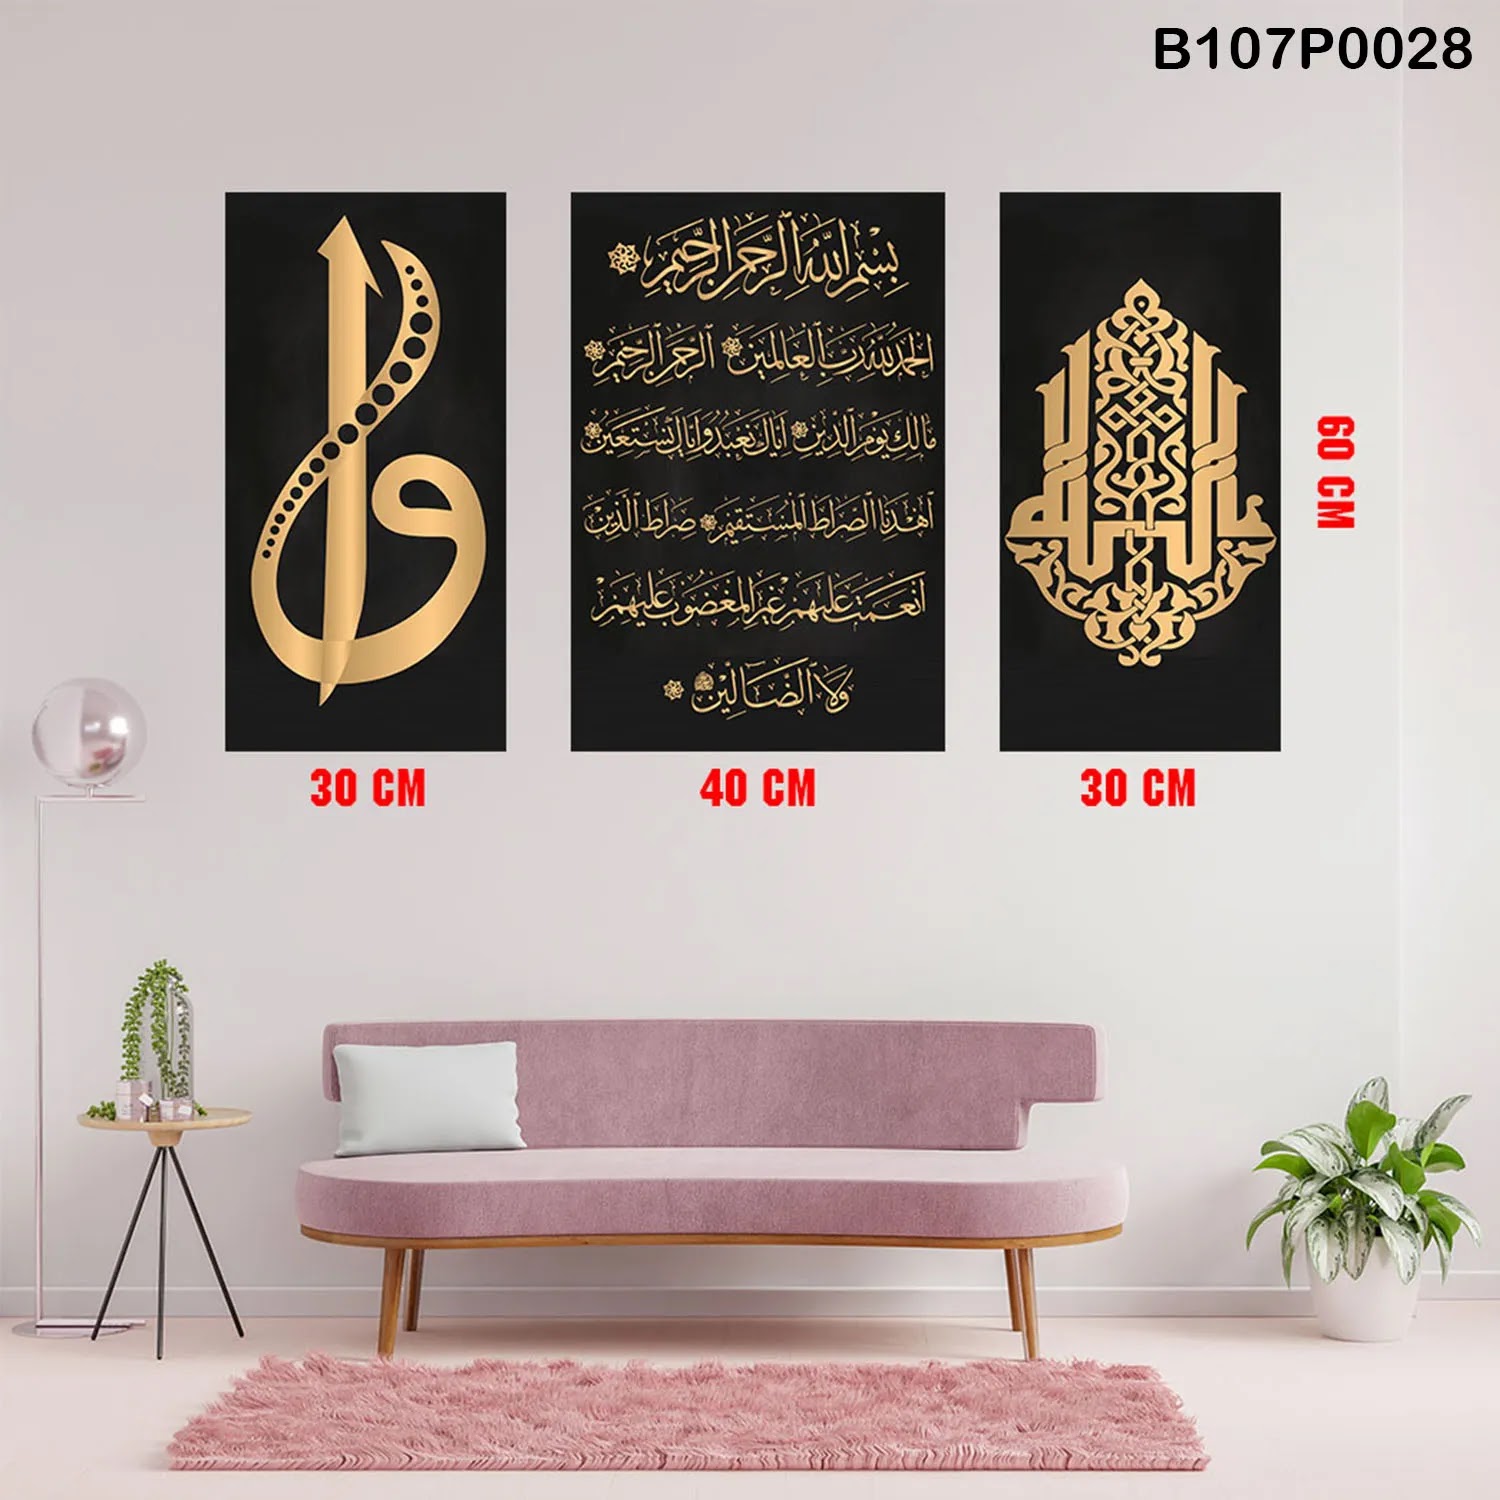 Black Triptych panel with Al-Fatiha